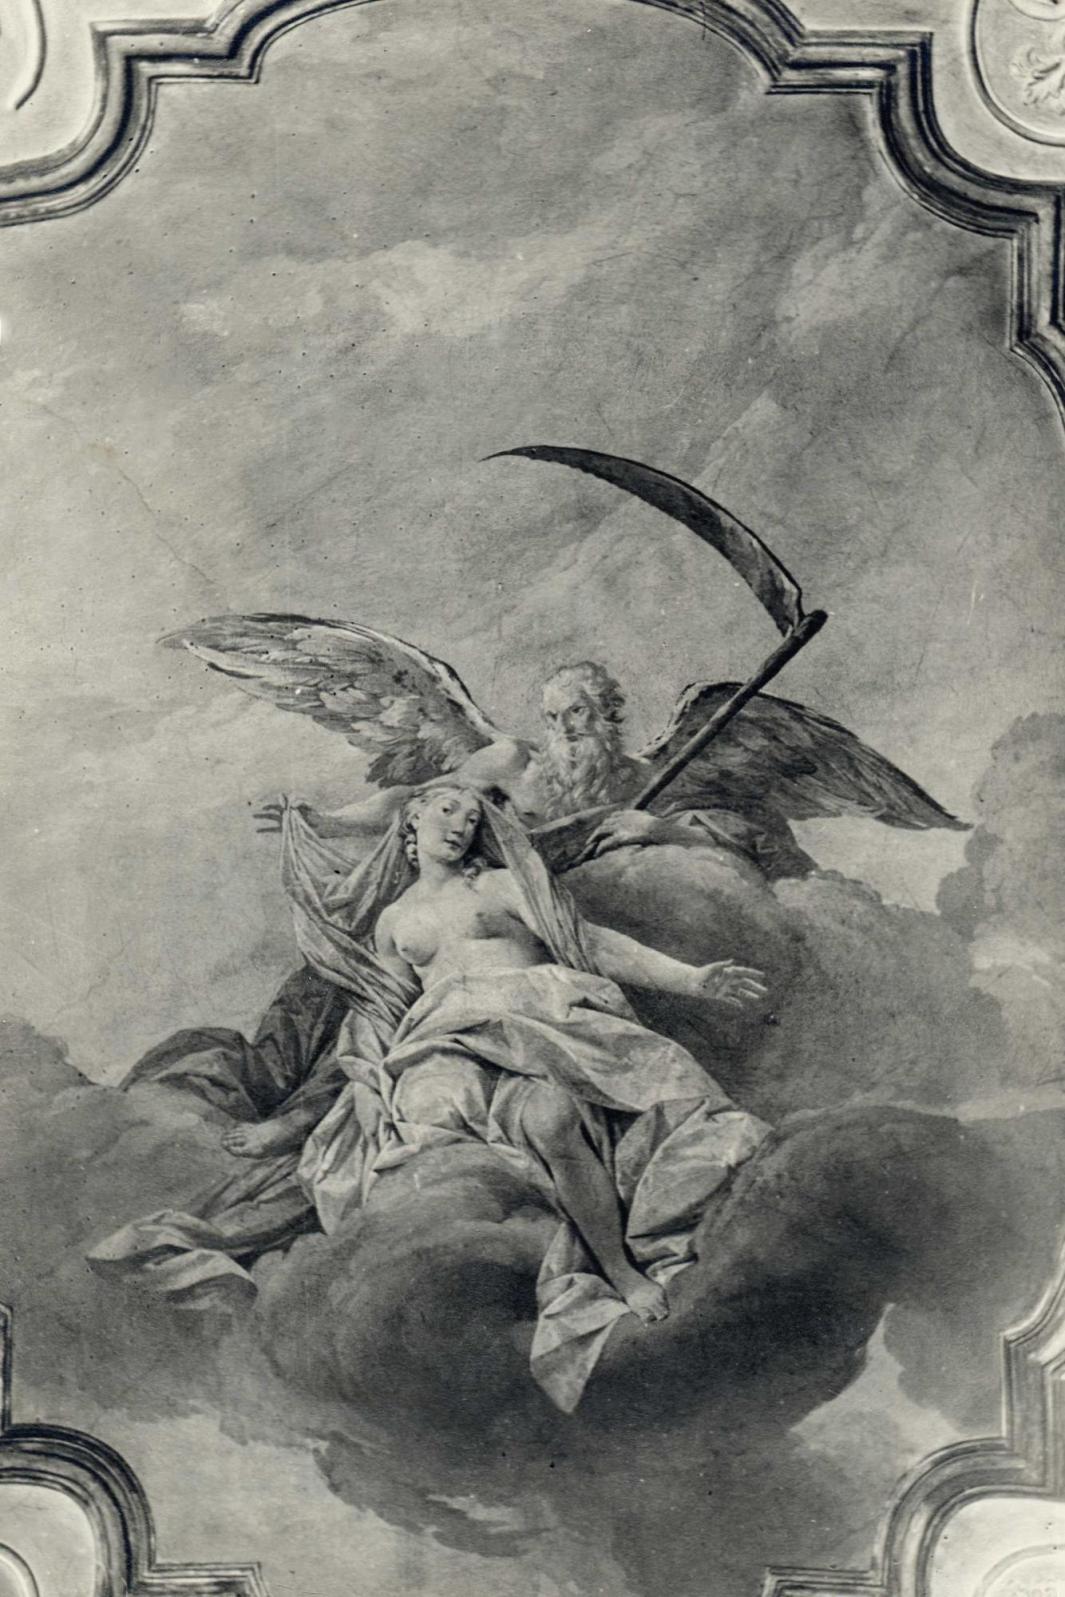 Photograph of a fresco depicting allegorical figures.